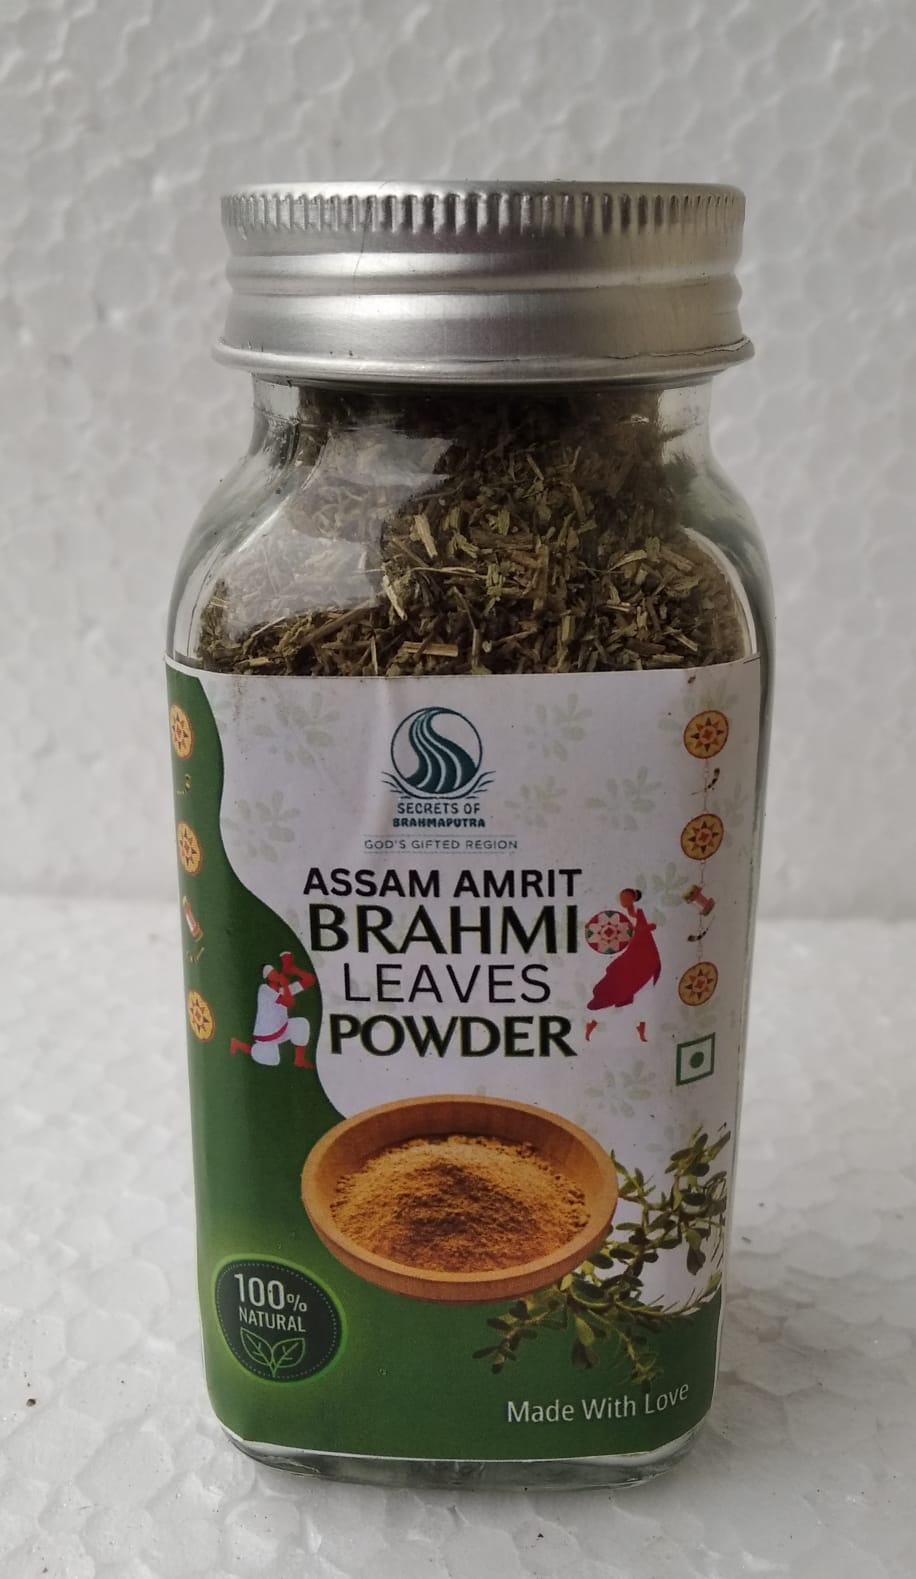 Image of Assam Amrit Brahmi Leaves Powder. From secretsofbrahmaputra.com